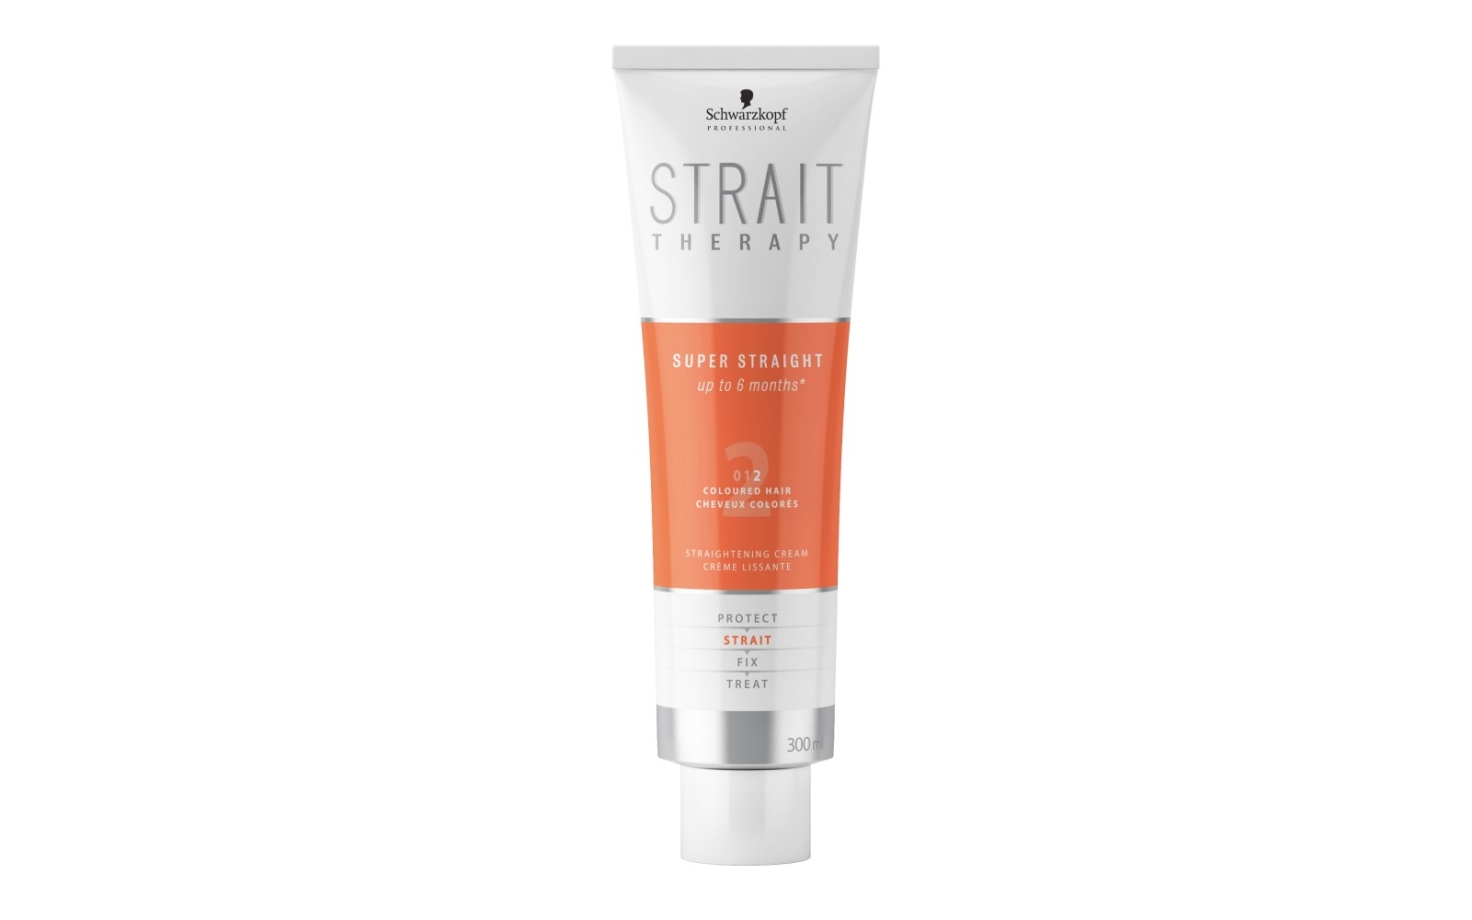 Schwarzkopf Strait Styling Therapy Cream 300 ml